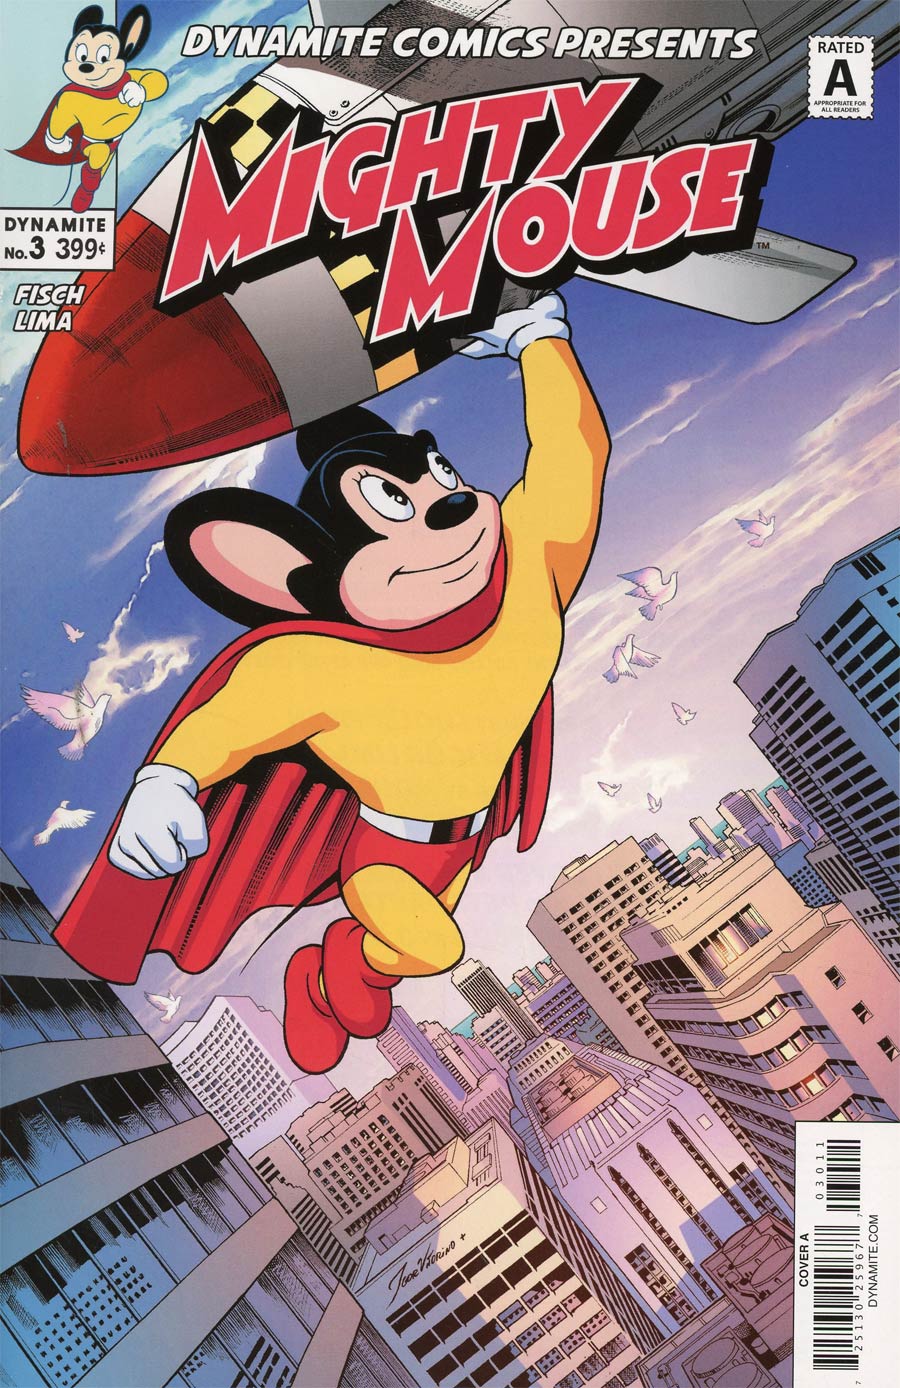 Mighty Mouse Vol 5 #3 Cover A Regular Igor Lima Cover